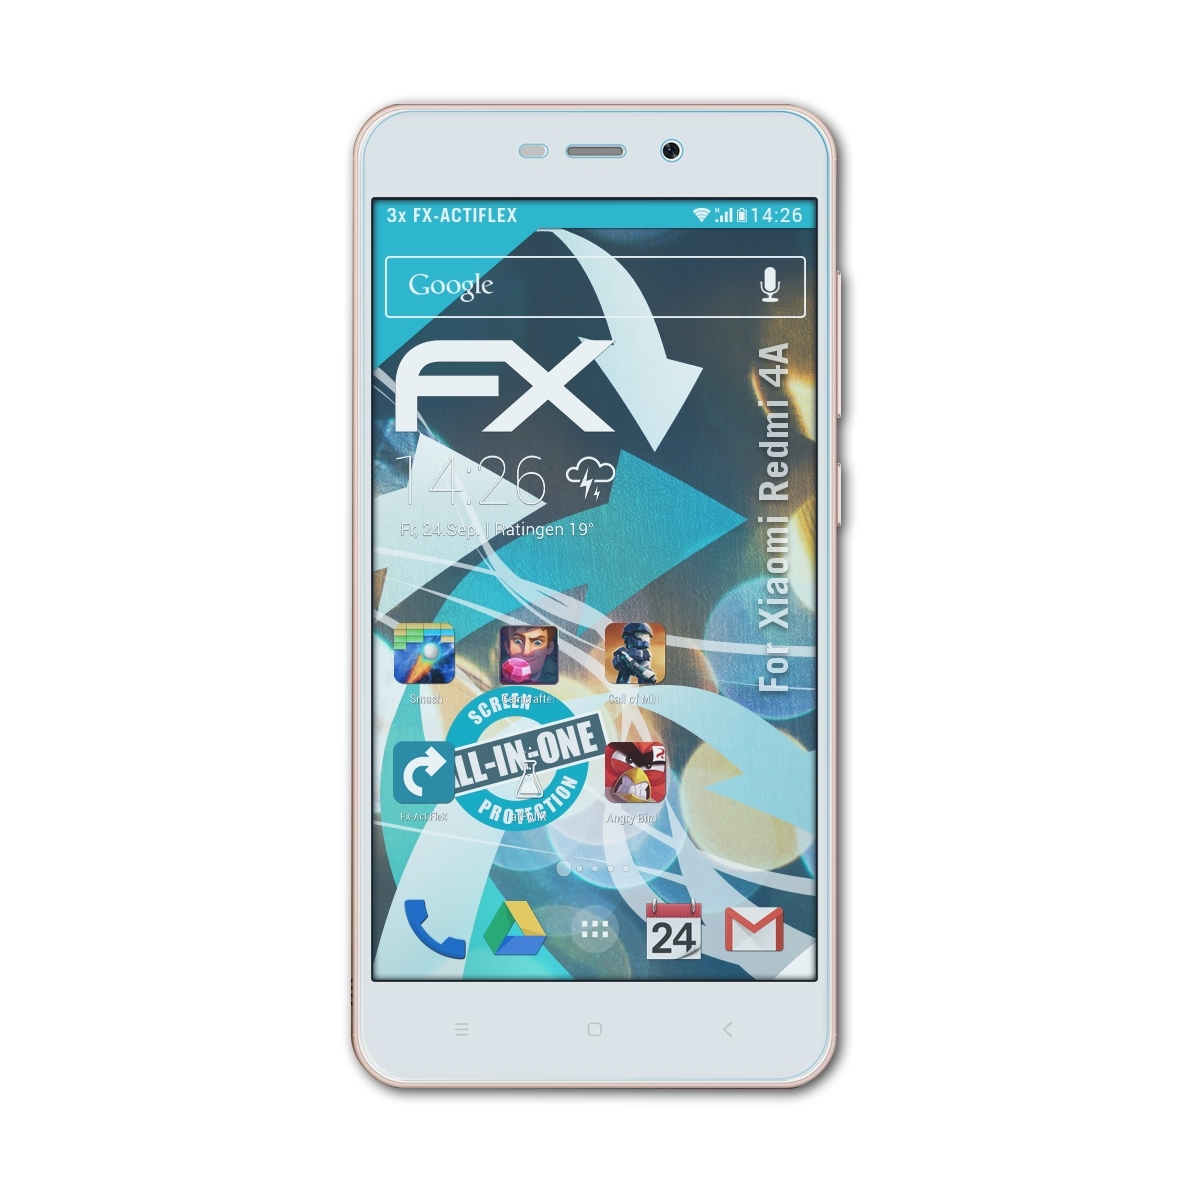 FX-ActiFleX Displayschutz(für Redmi Xiaomi 4A) 3x ATFOLIX